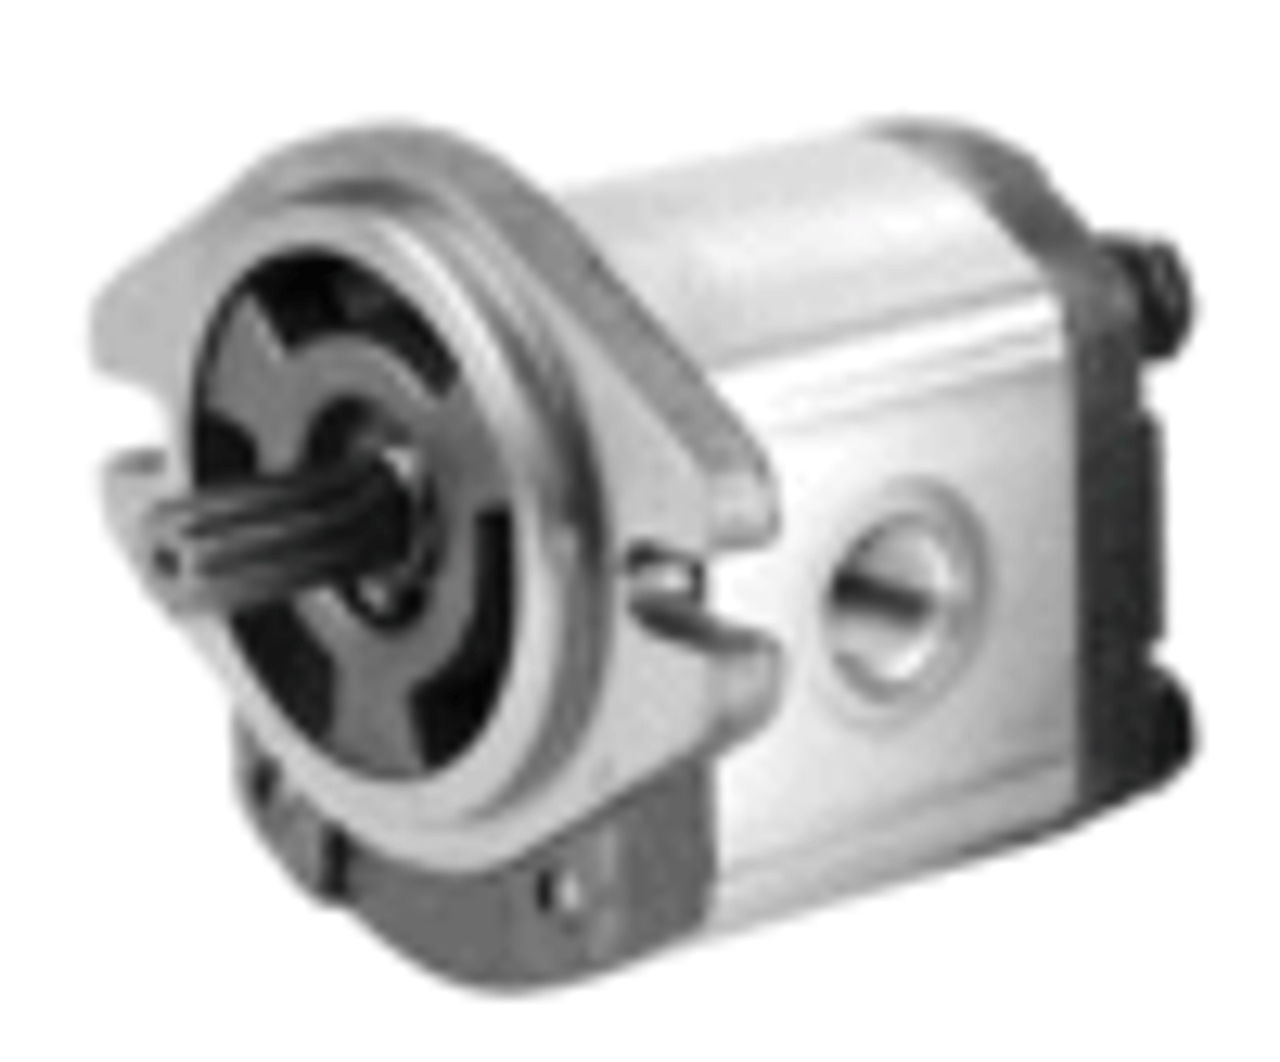 Honor Pumps 2MM2U26 Hydraulic gear motor 1.53 cubic inch displacement 9T splined shaft Bi-directional